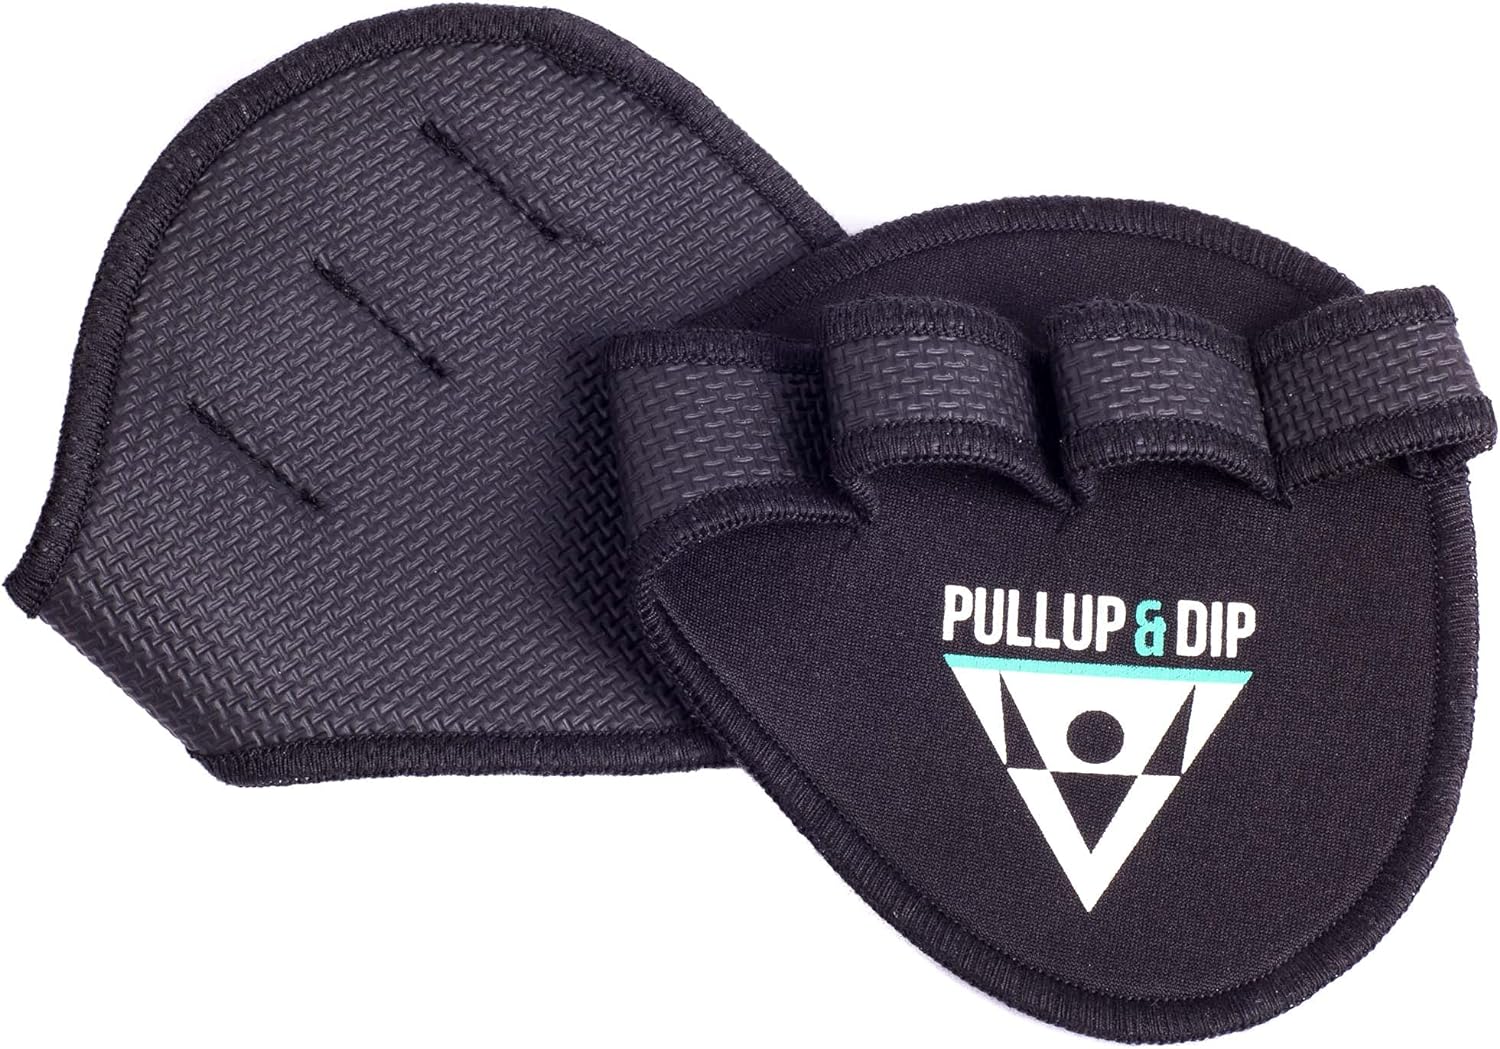 PULLUP & DIP Neoprene Grip Pads Review